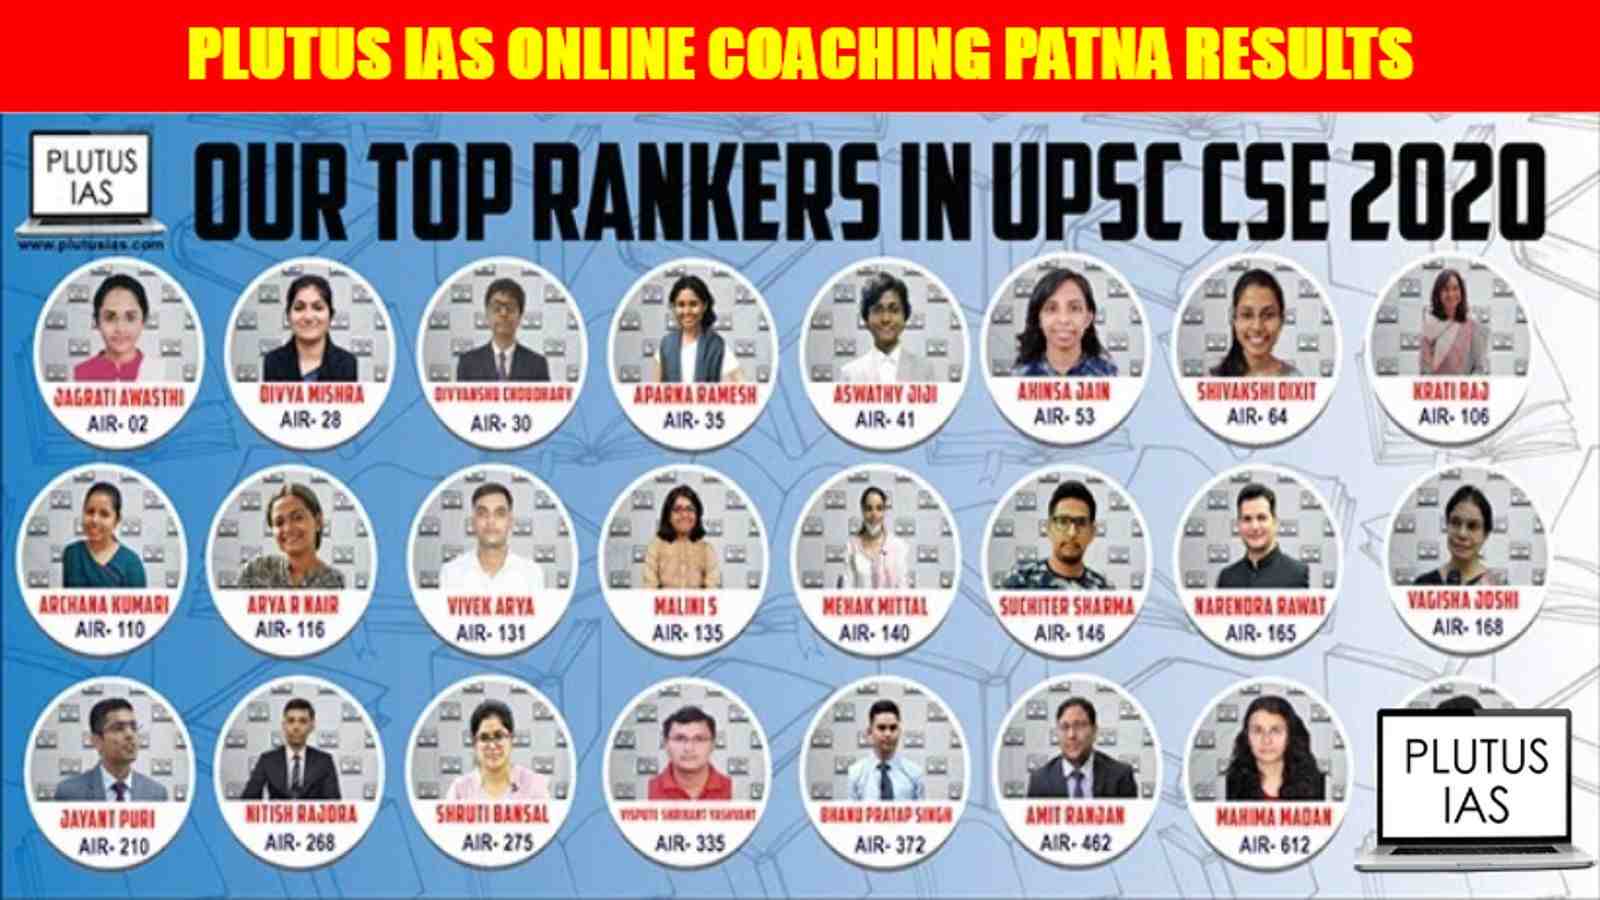 Plutus IAS Online Coaching Patna Results